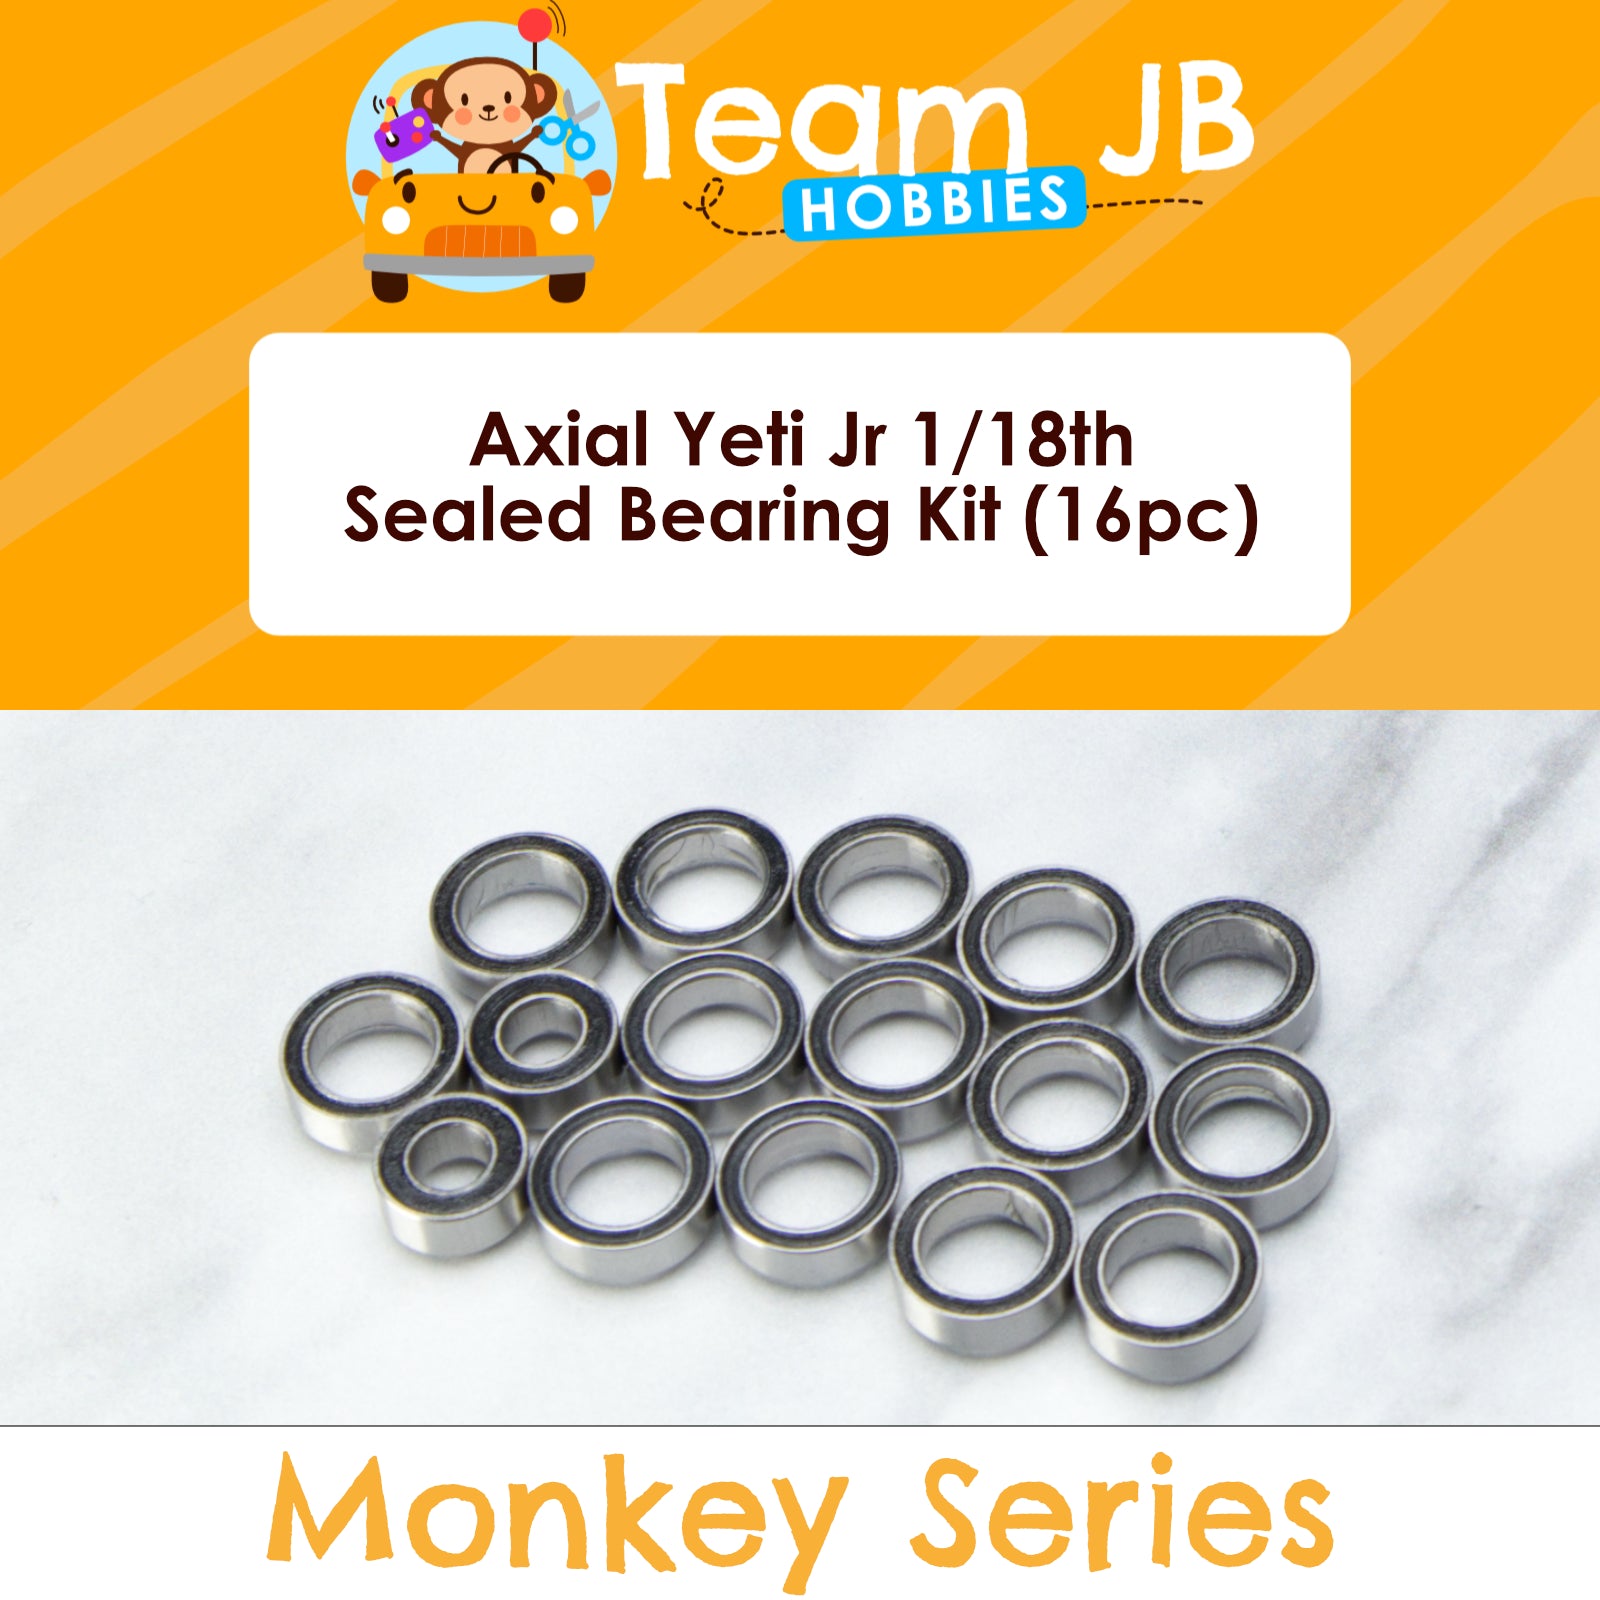 Axial Yeti Jr 1/18th - Sealed Bearing Kit